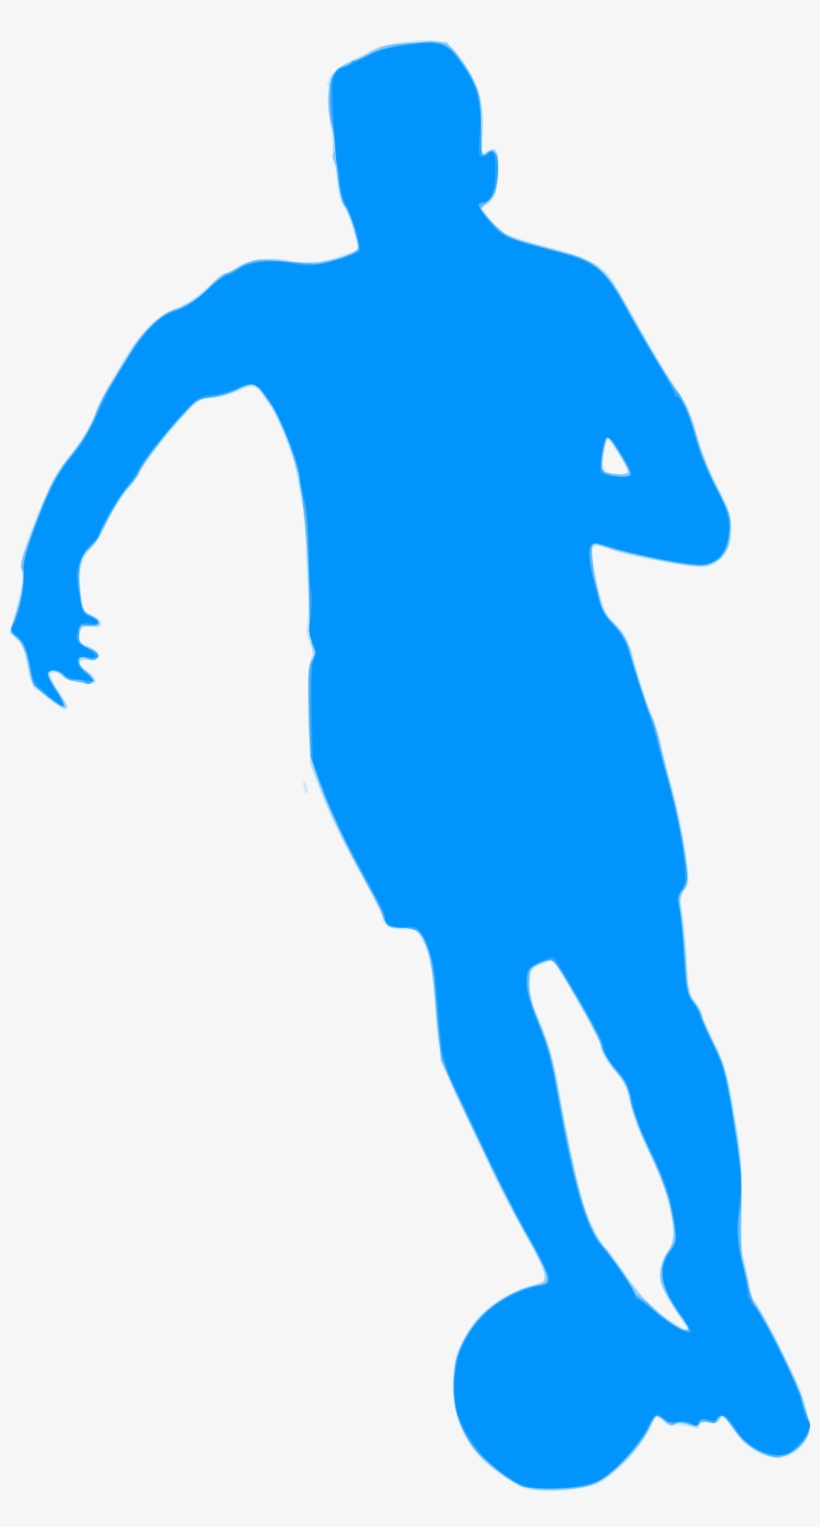 Association Football Referee Football Pitch Clip Art - Clip Art, transparent png #8688510